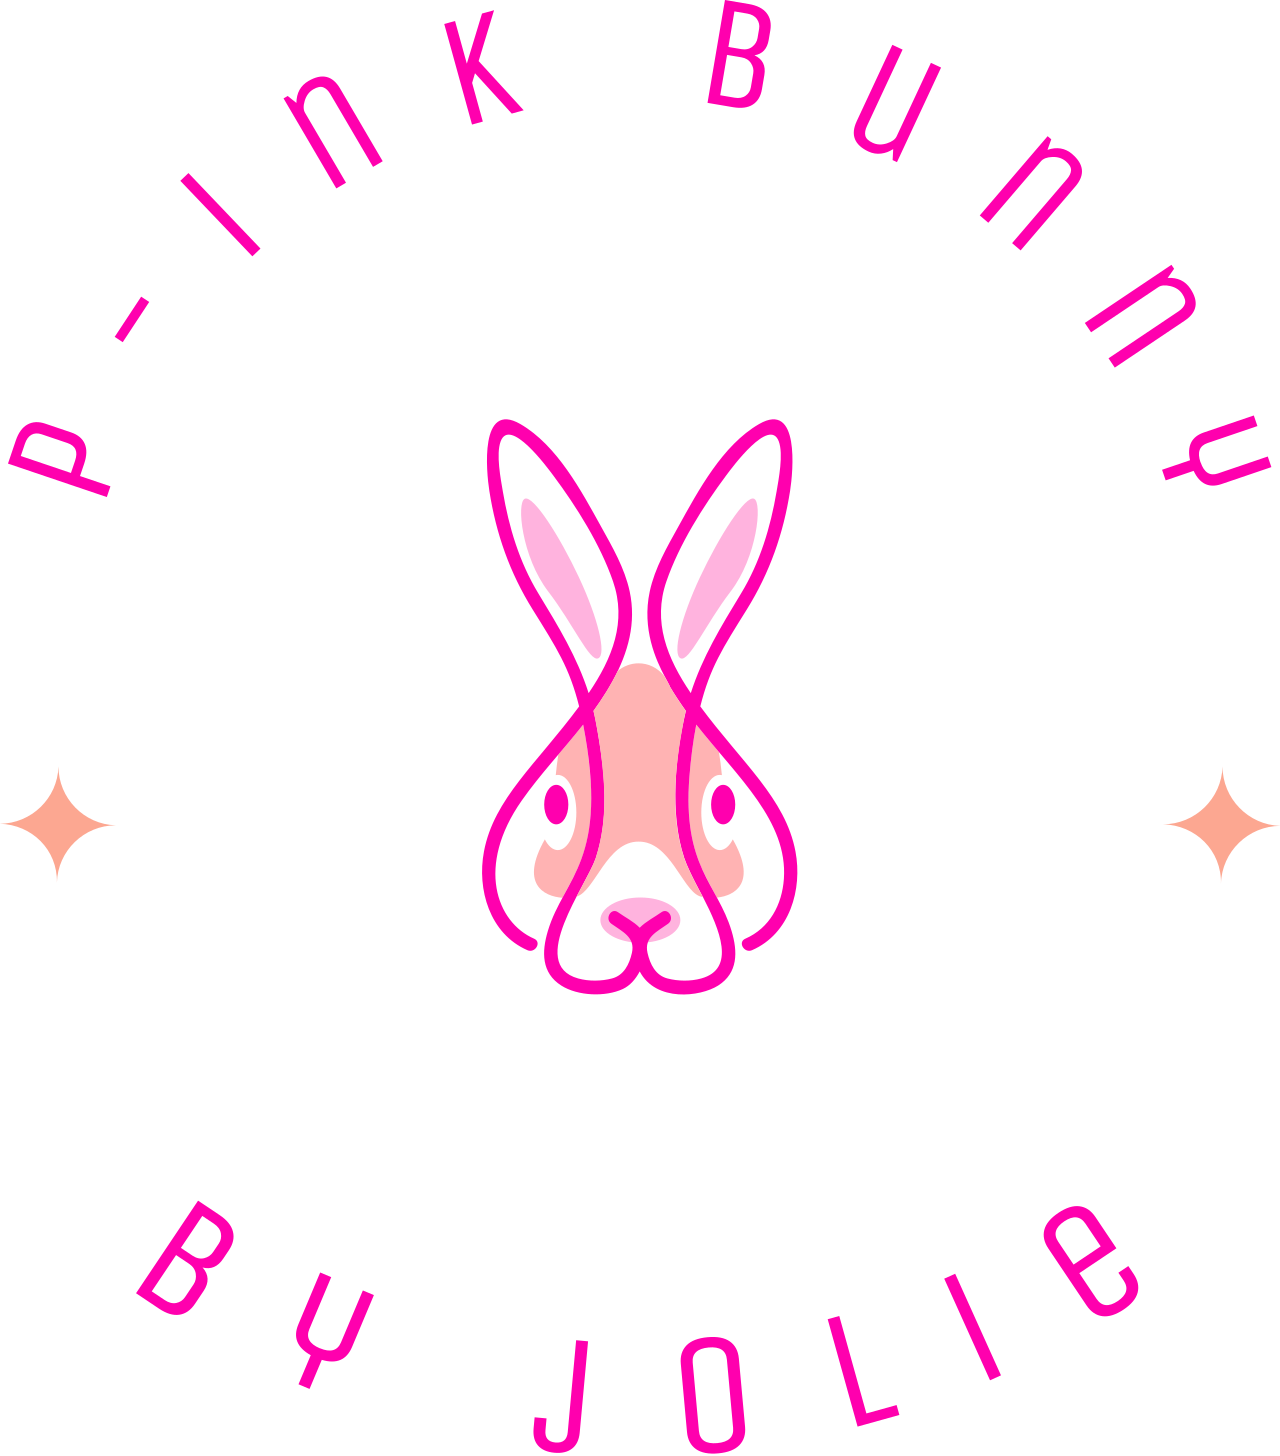 P-ink Bunny's logo